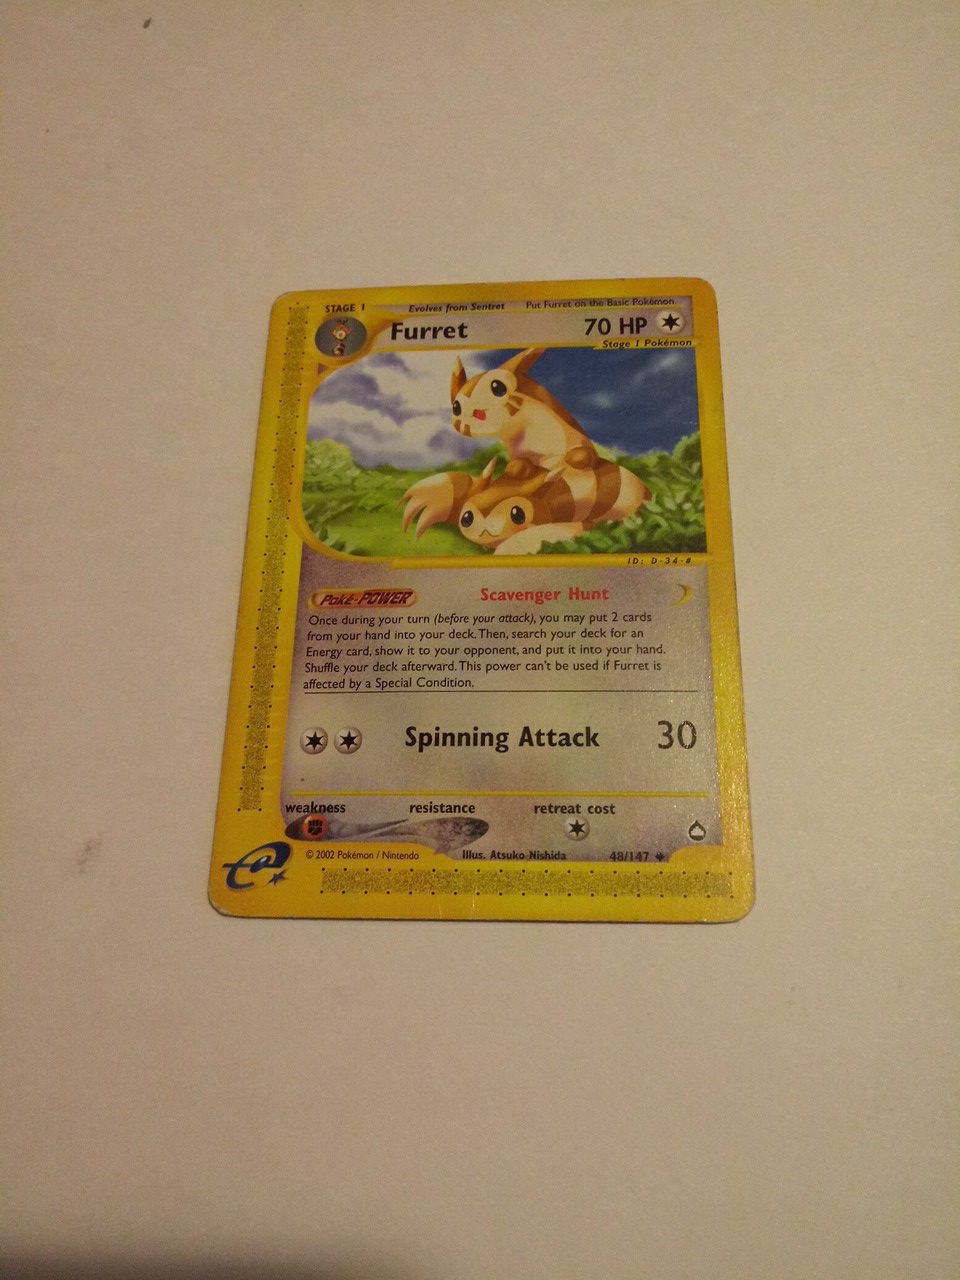 Furret pokemon cards 48/147